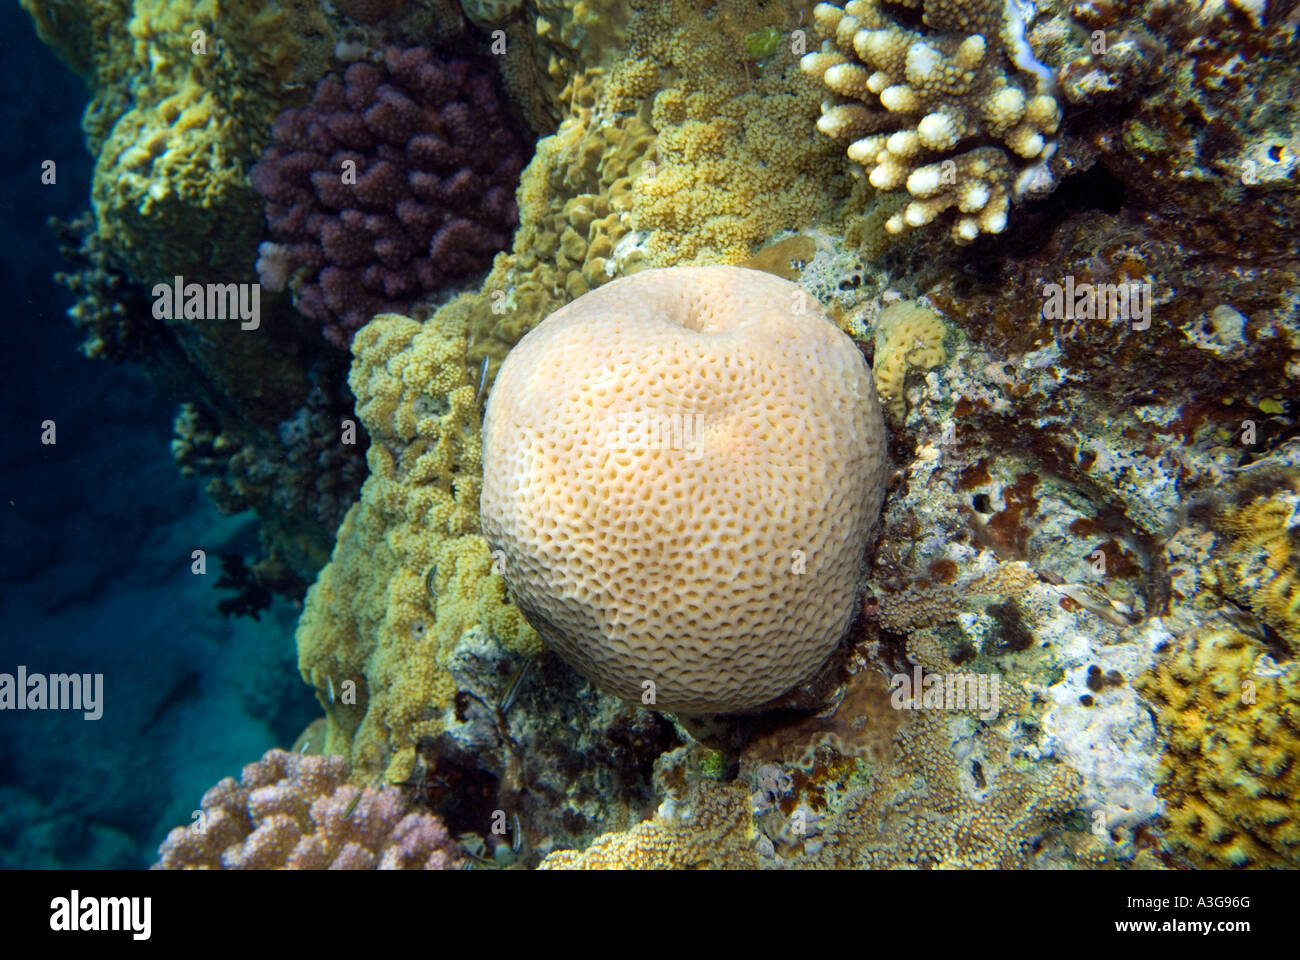 Honey Comb Coral FAVIA FAVUS  reef scenery paradies under water sealife fish coralgarden garden sea RAS MOHAMED Sharm El Sheikh Stock Photo